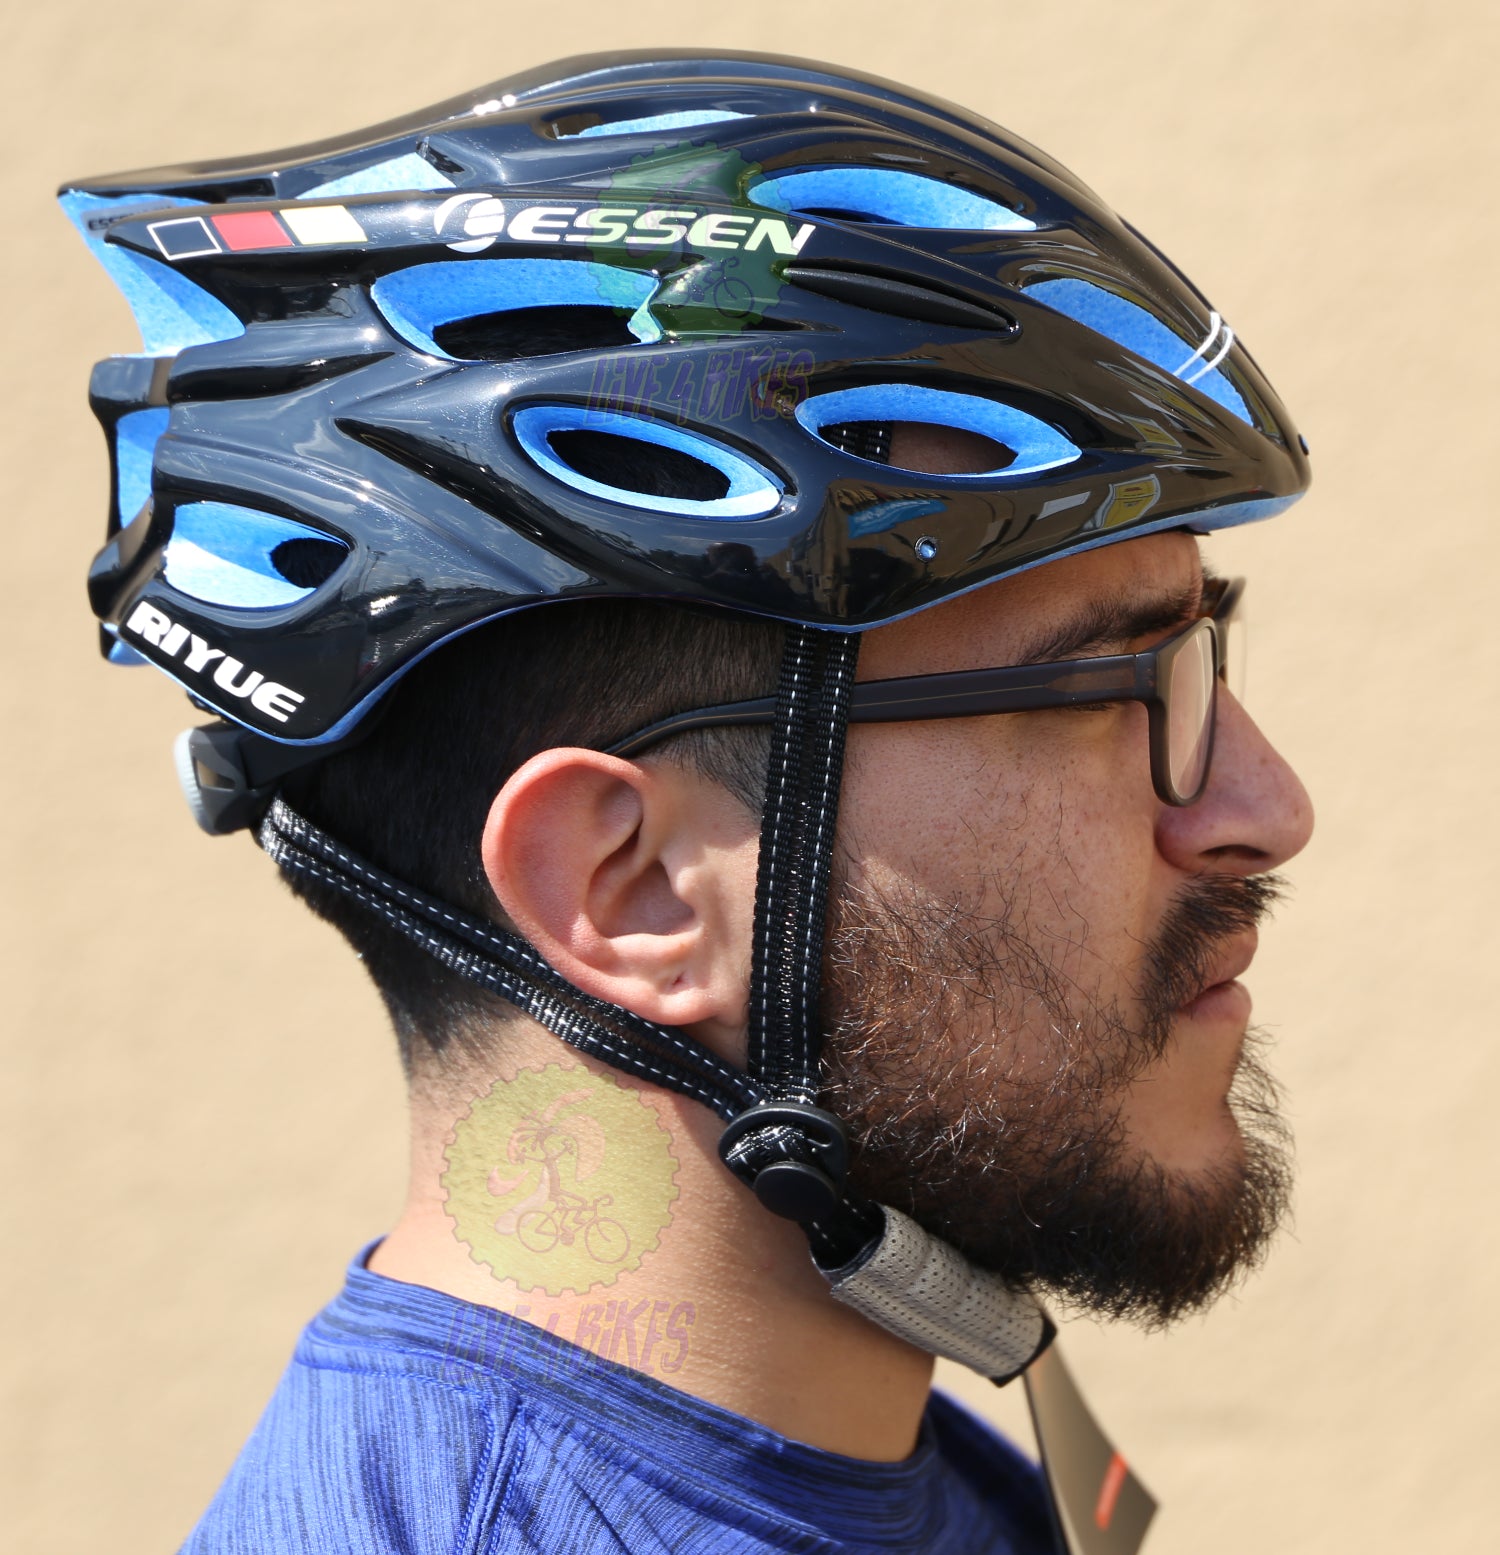 Essen Road bike Helmet Black and Blue M/L - Live 4 Bikes